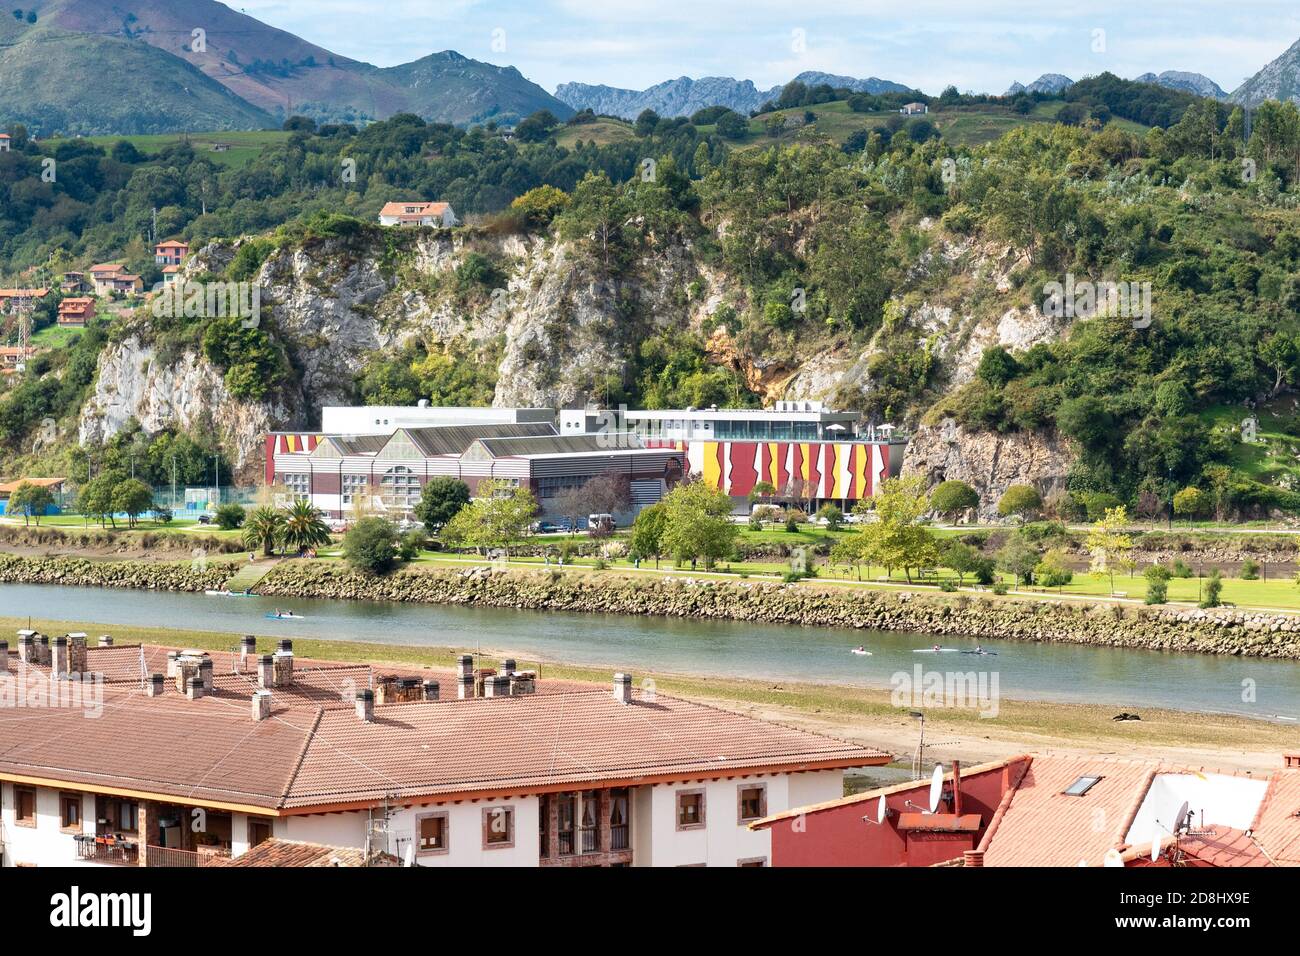 Cave Art Interpretation Centre, Rock Art Centre and sports complex by the River Sella, Ribadesella, Asturias, Spain Stock Photo